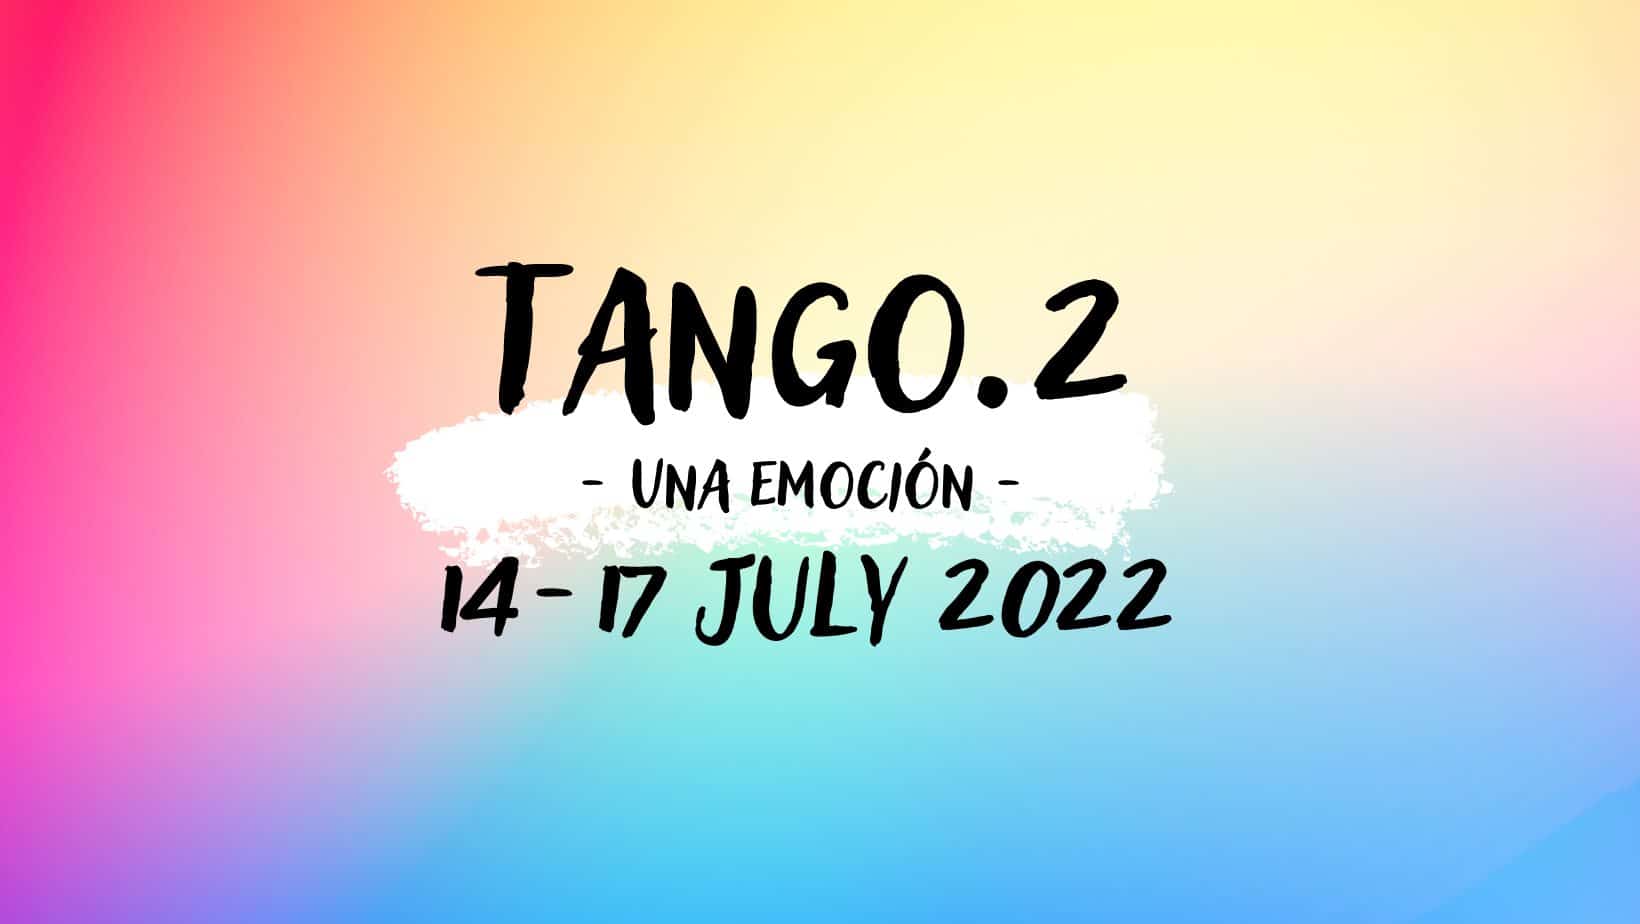 Tango.2 Tango Festival 2022 - Una emoción event picture